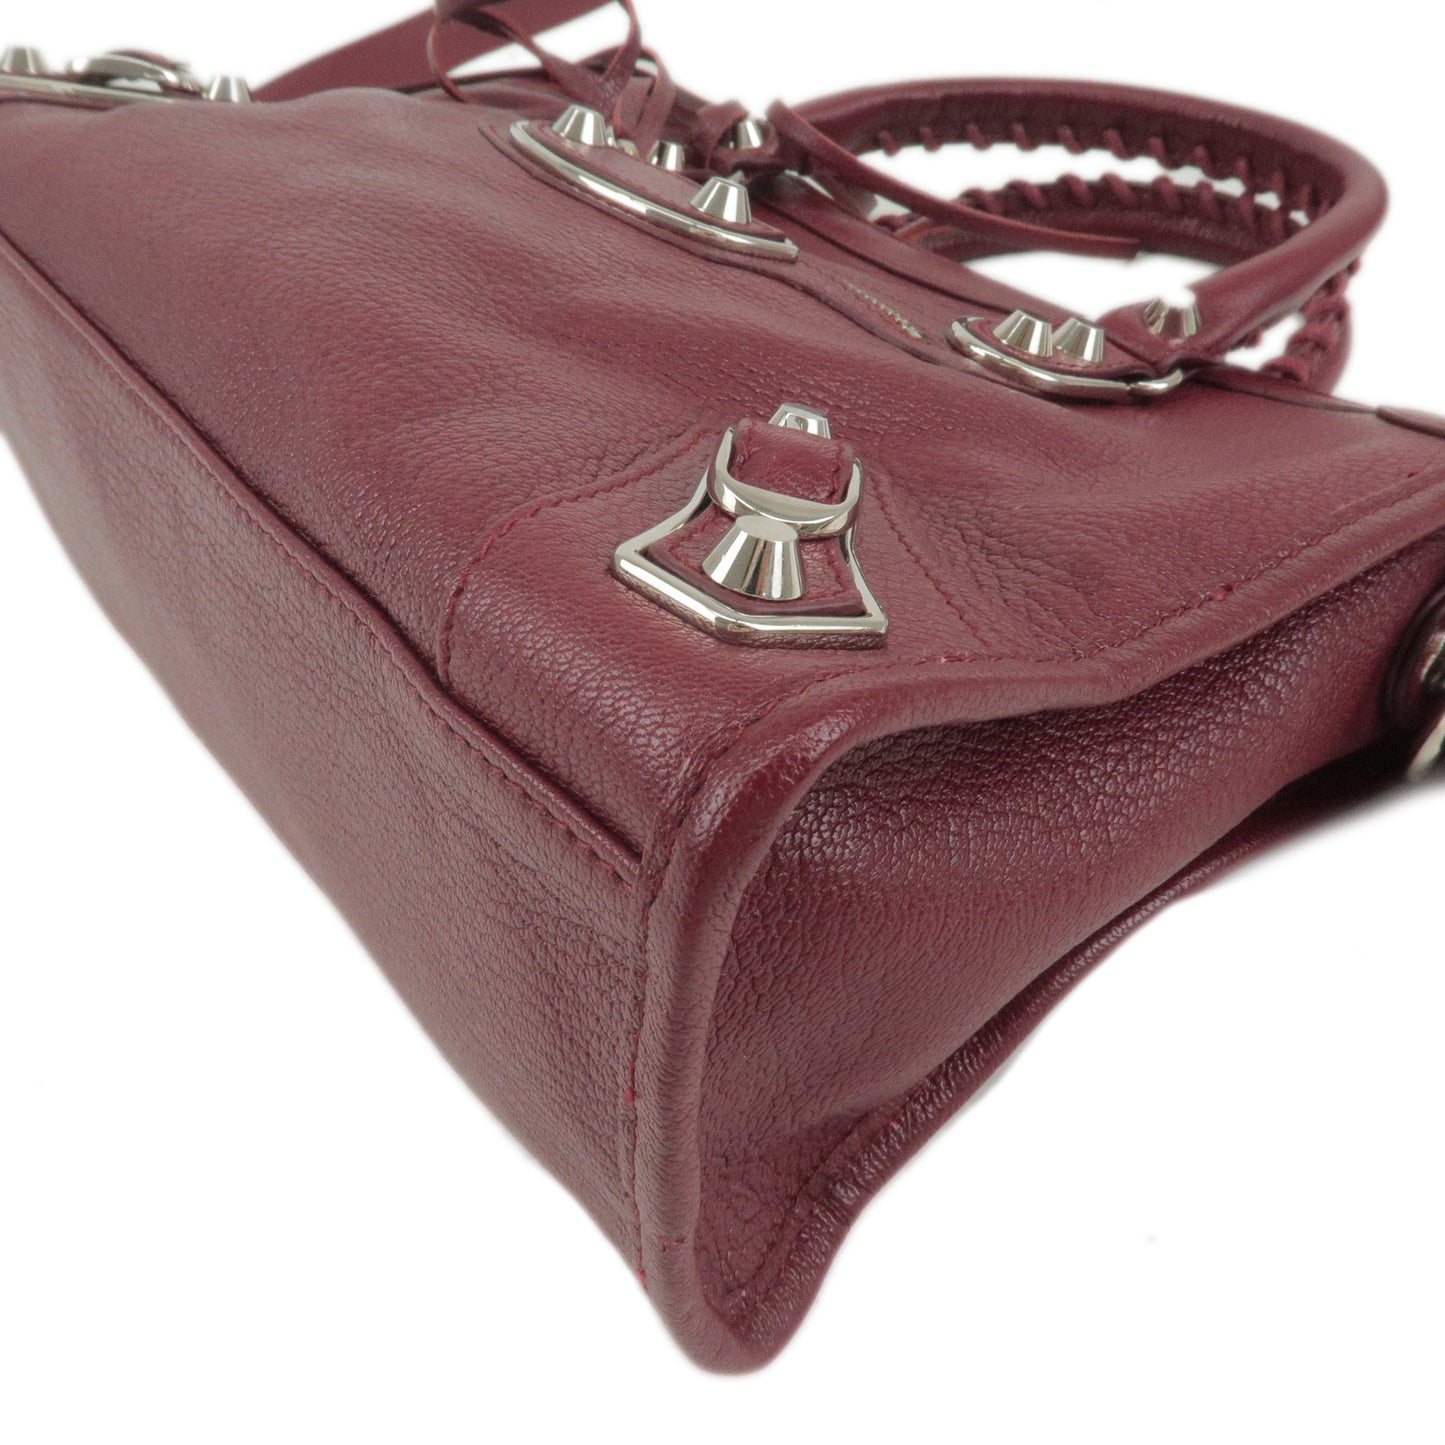 BALENCIAGA Leather Classic Metallic Edge City Bag Bordeaux 432831